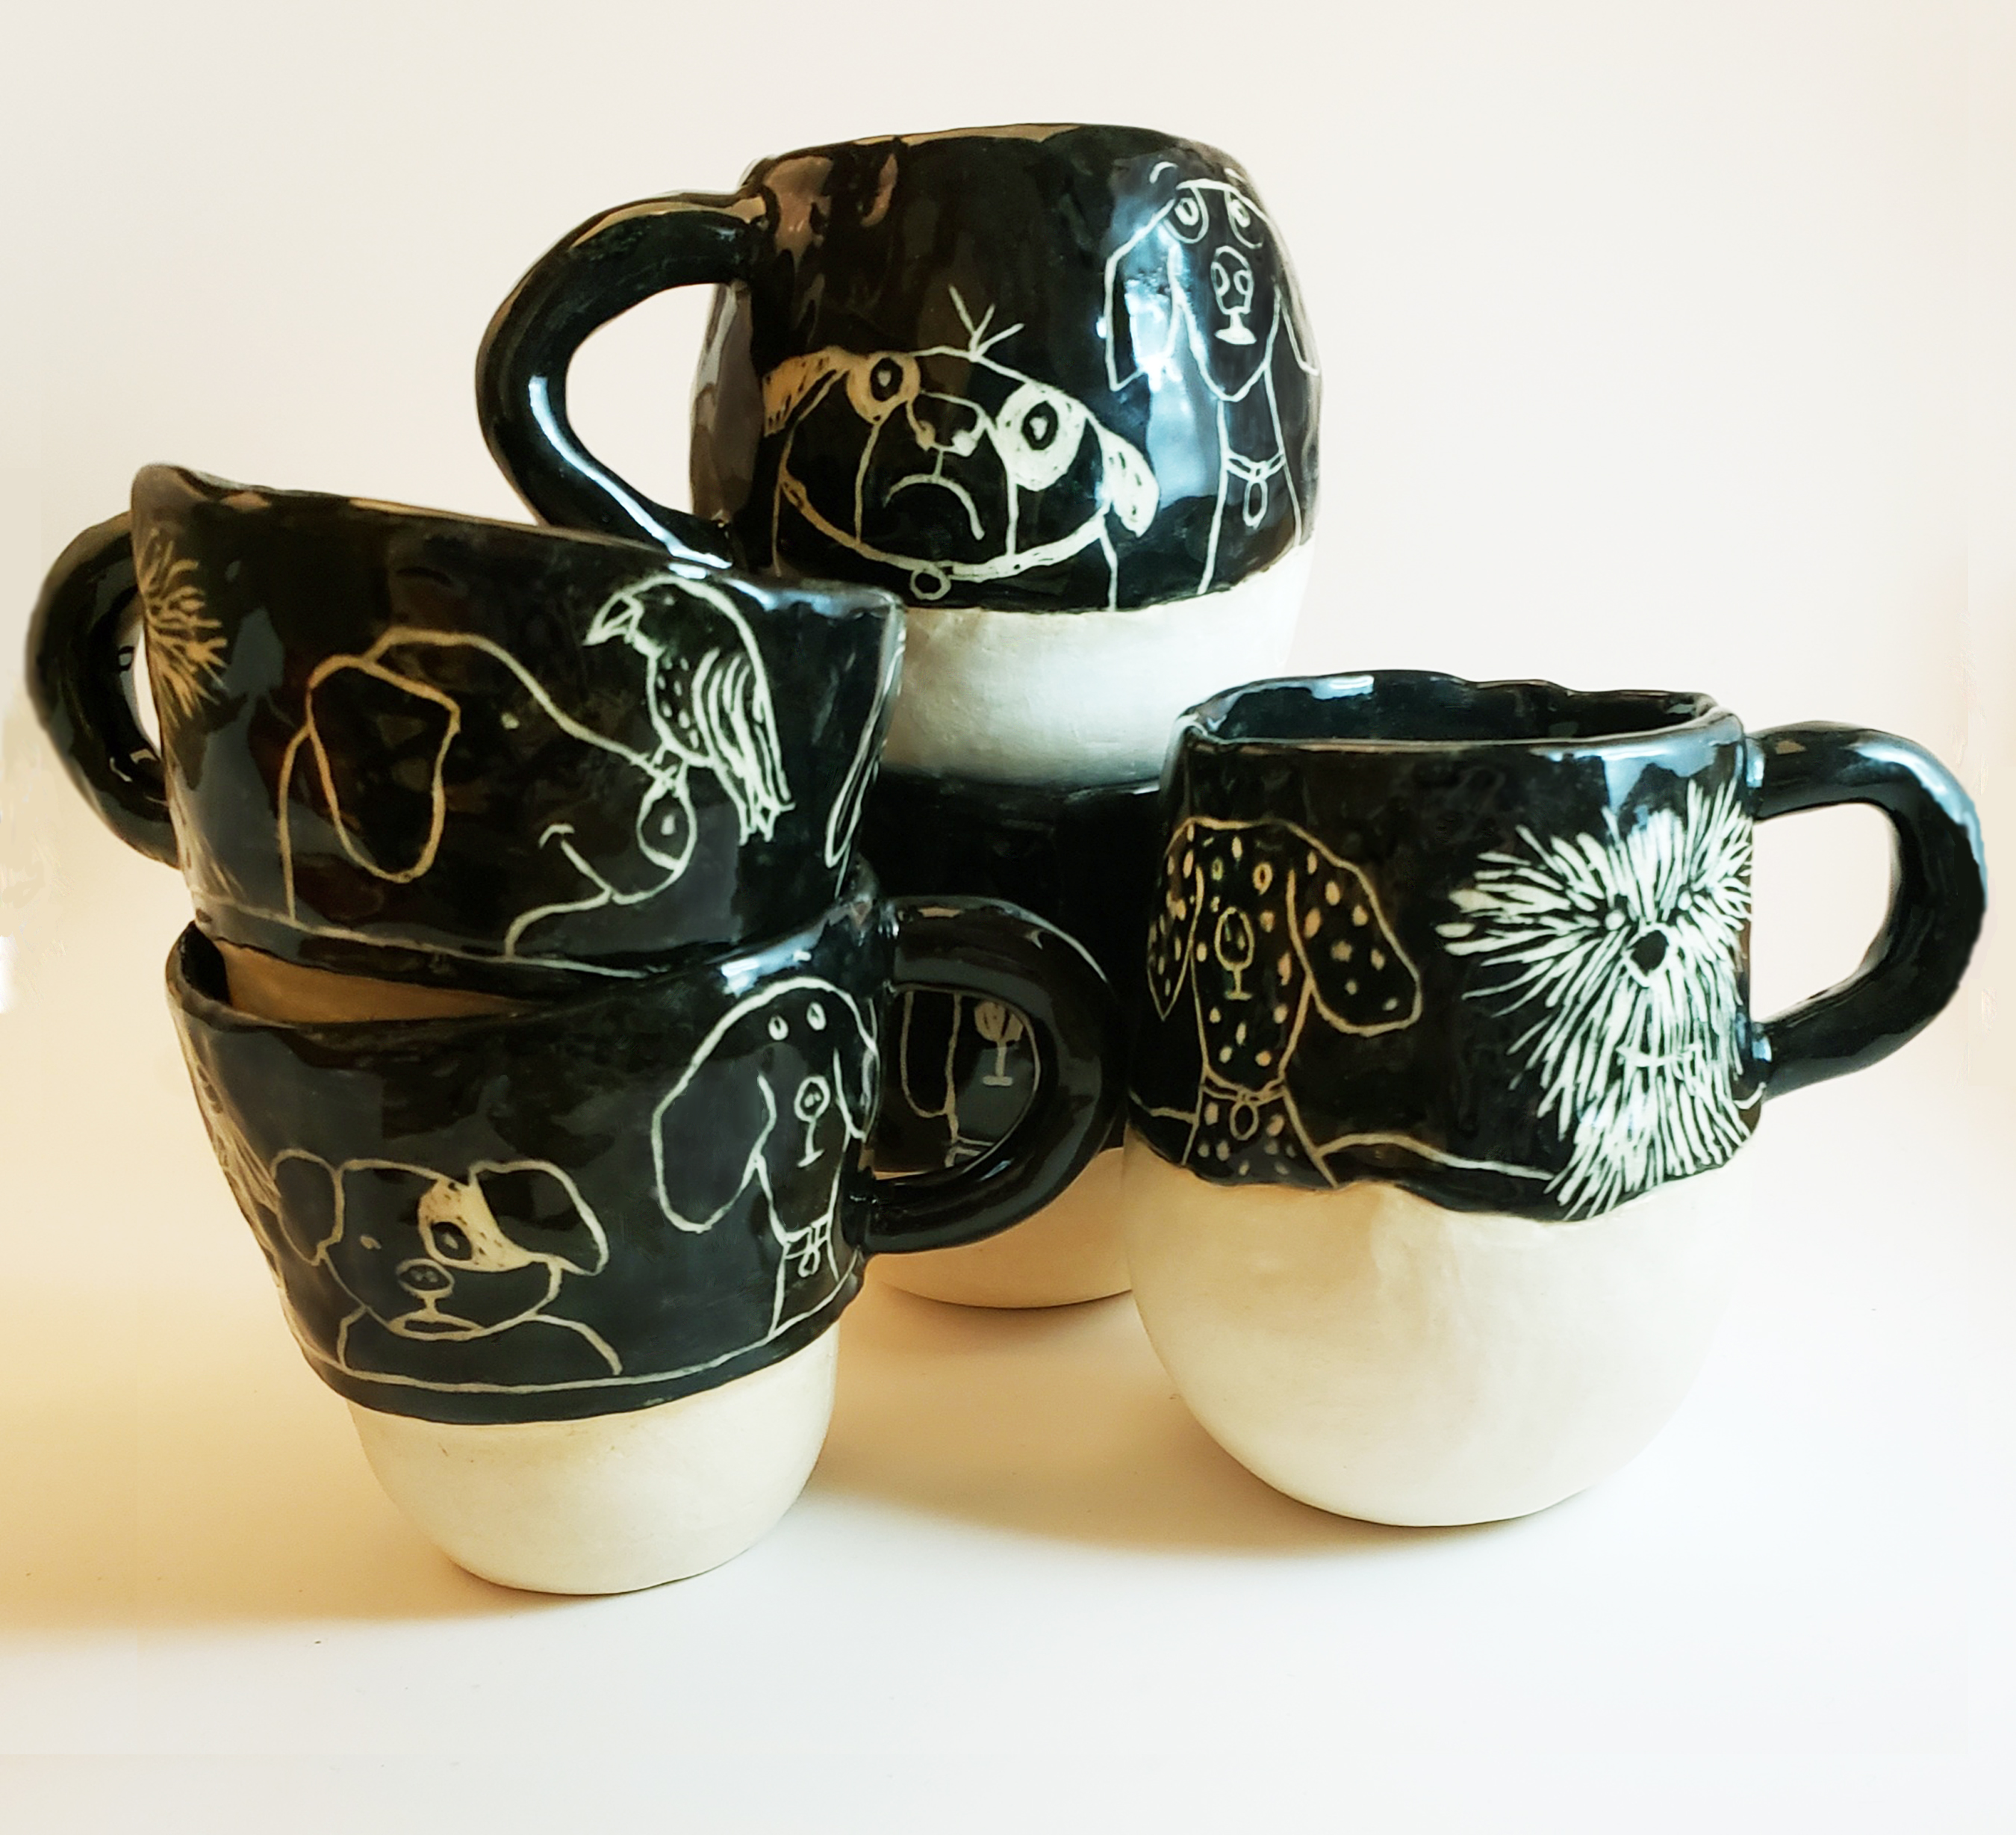 Ceramics by Karen